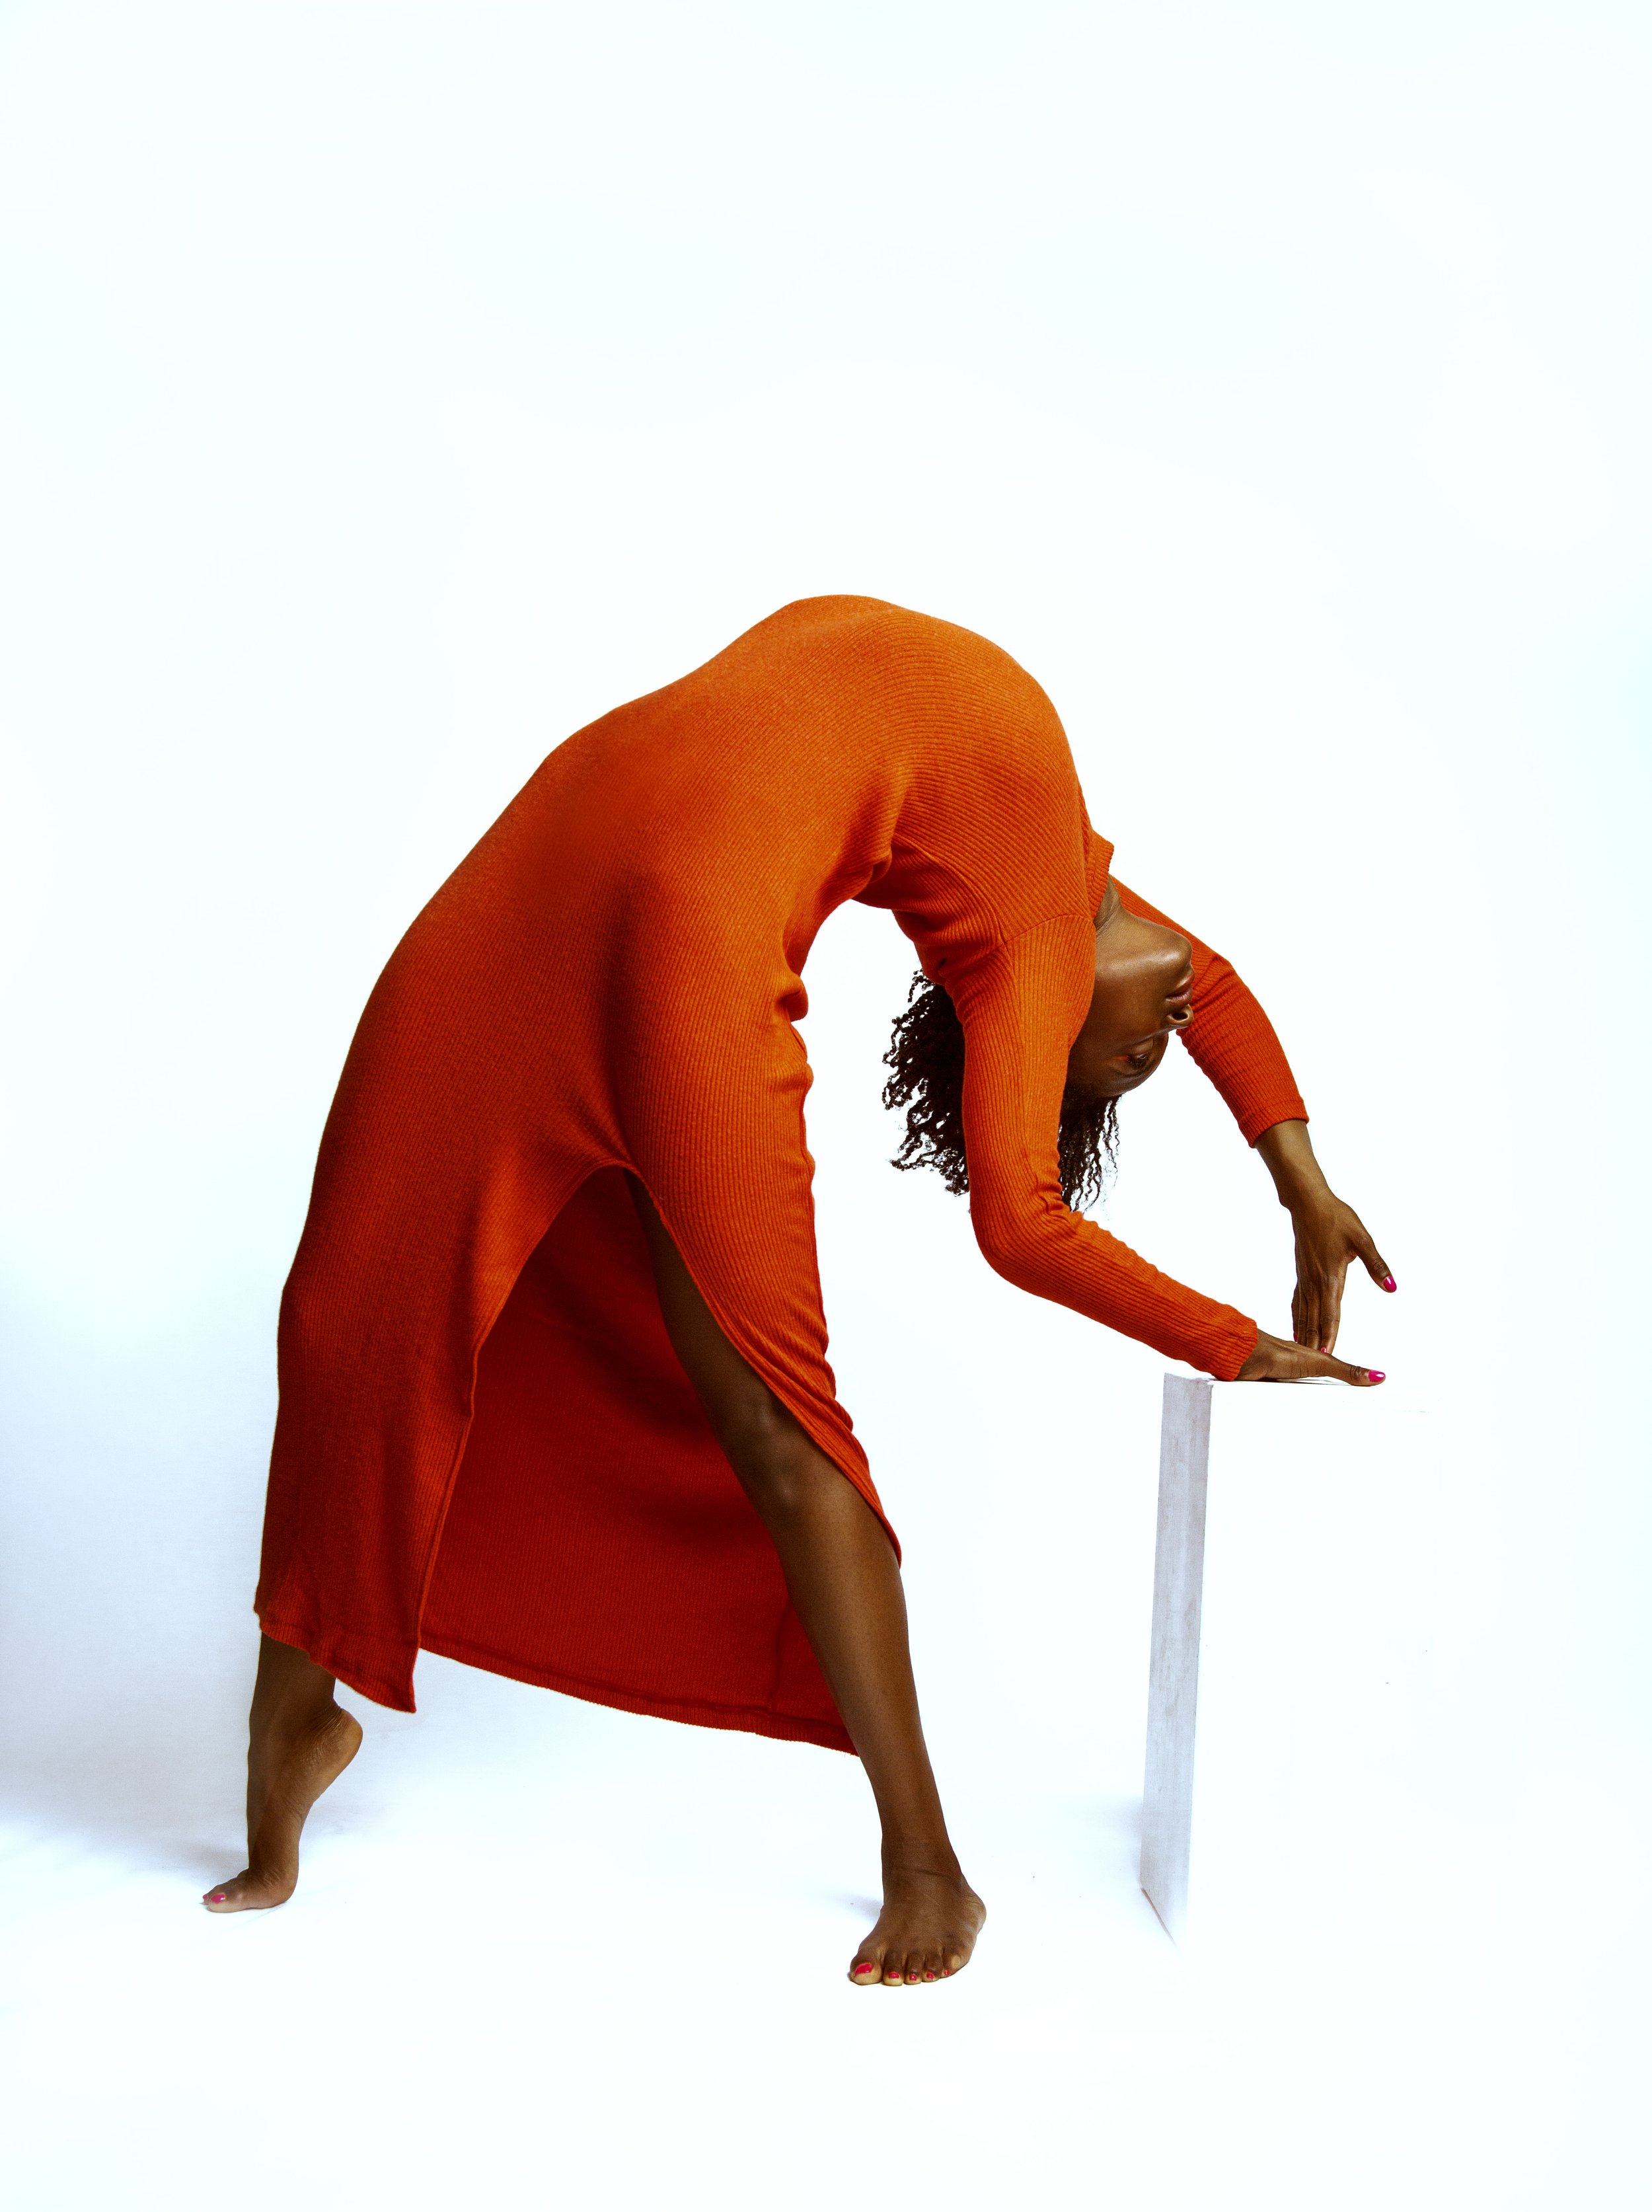  national rhythmic gymnastics team member in Kirkland Washington Photoshoot.  Dance portrait in studio showing back flexibility picture. 